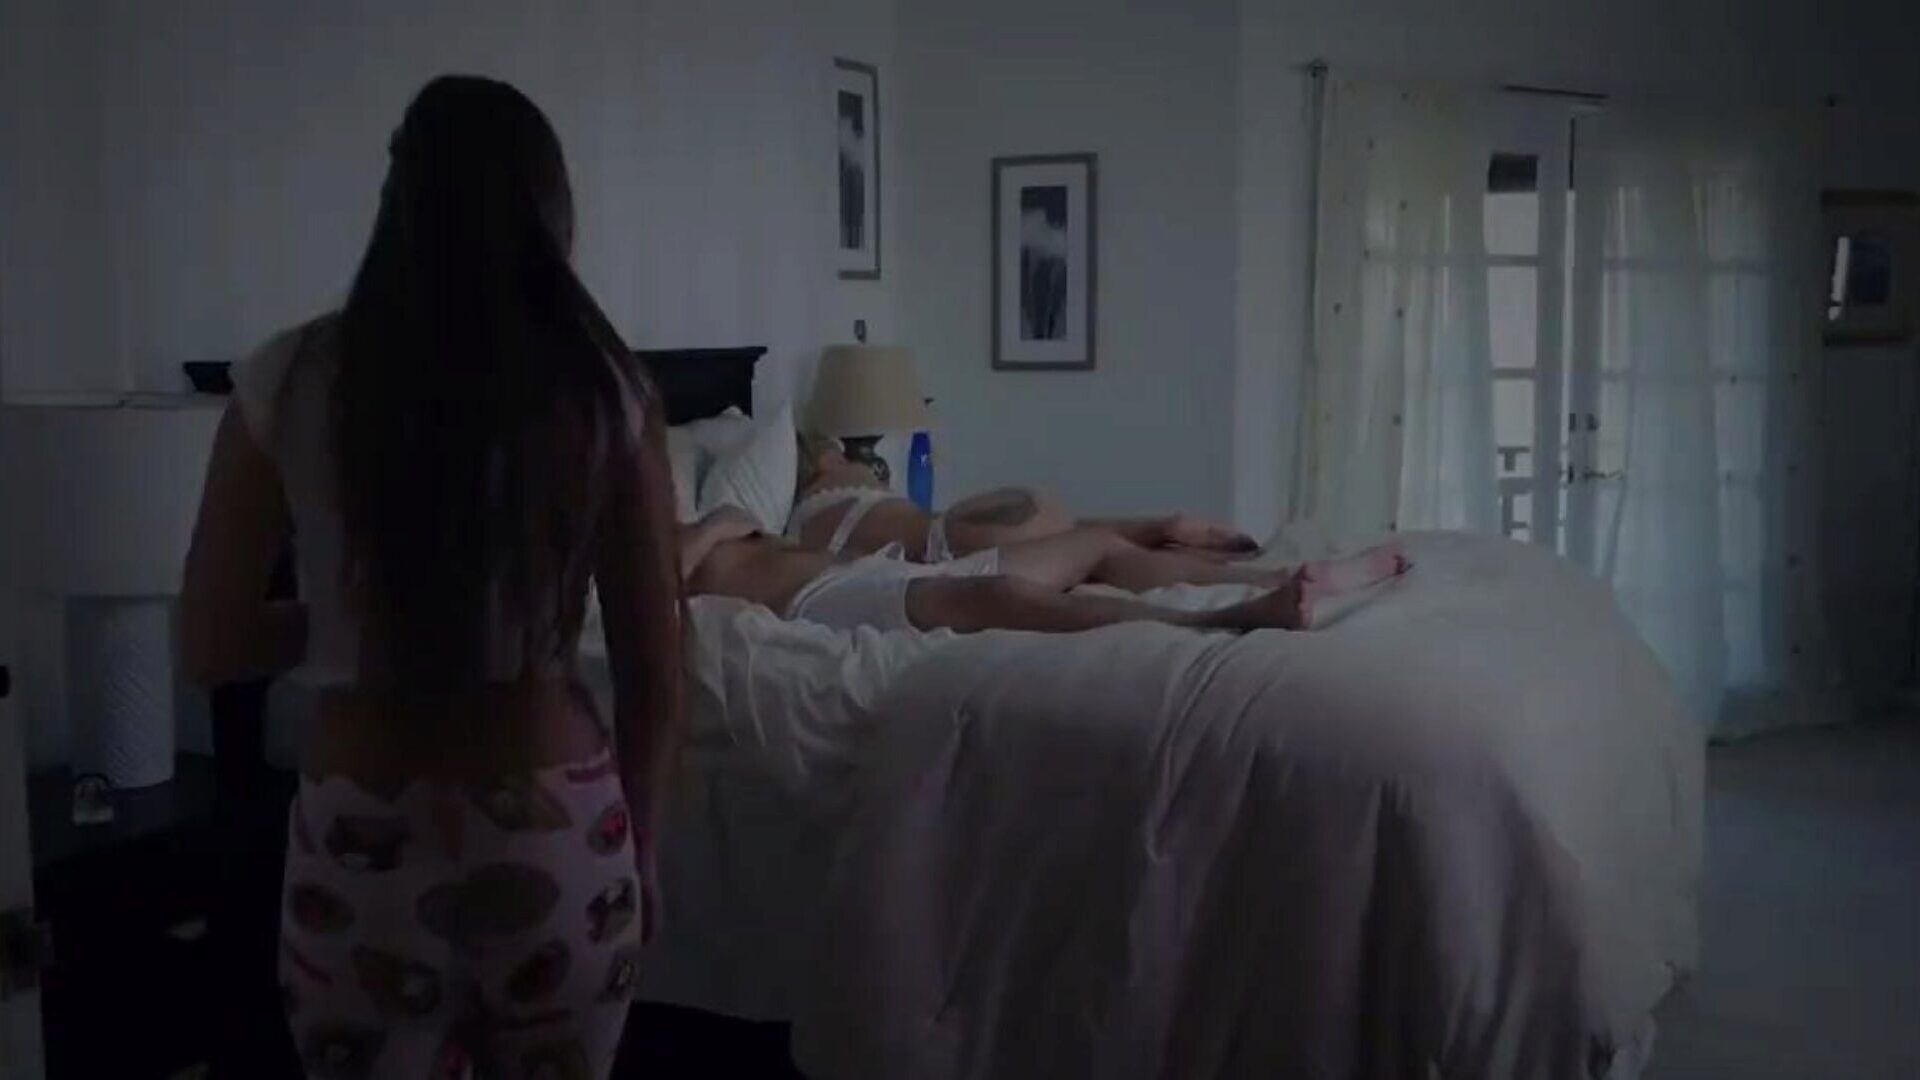 sexet lovlig alder teenager porno hardcore stedfar side af sengen sexet lovlig alder teenager porno xxx stedfar side af sengen stepdads side af sengen